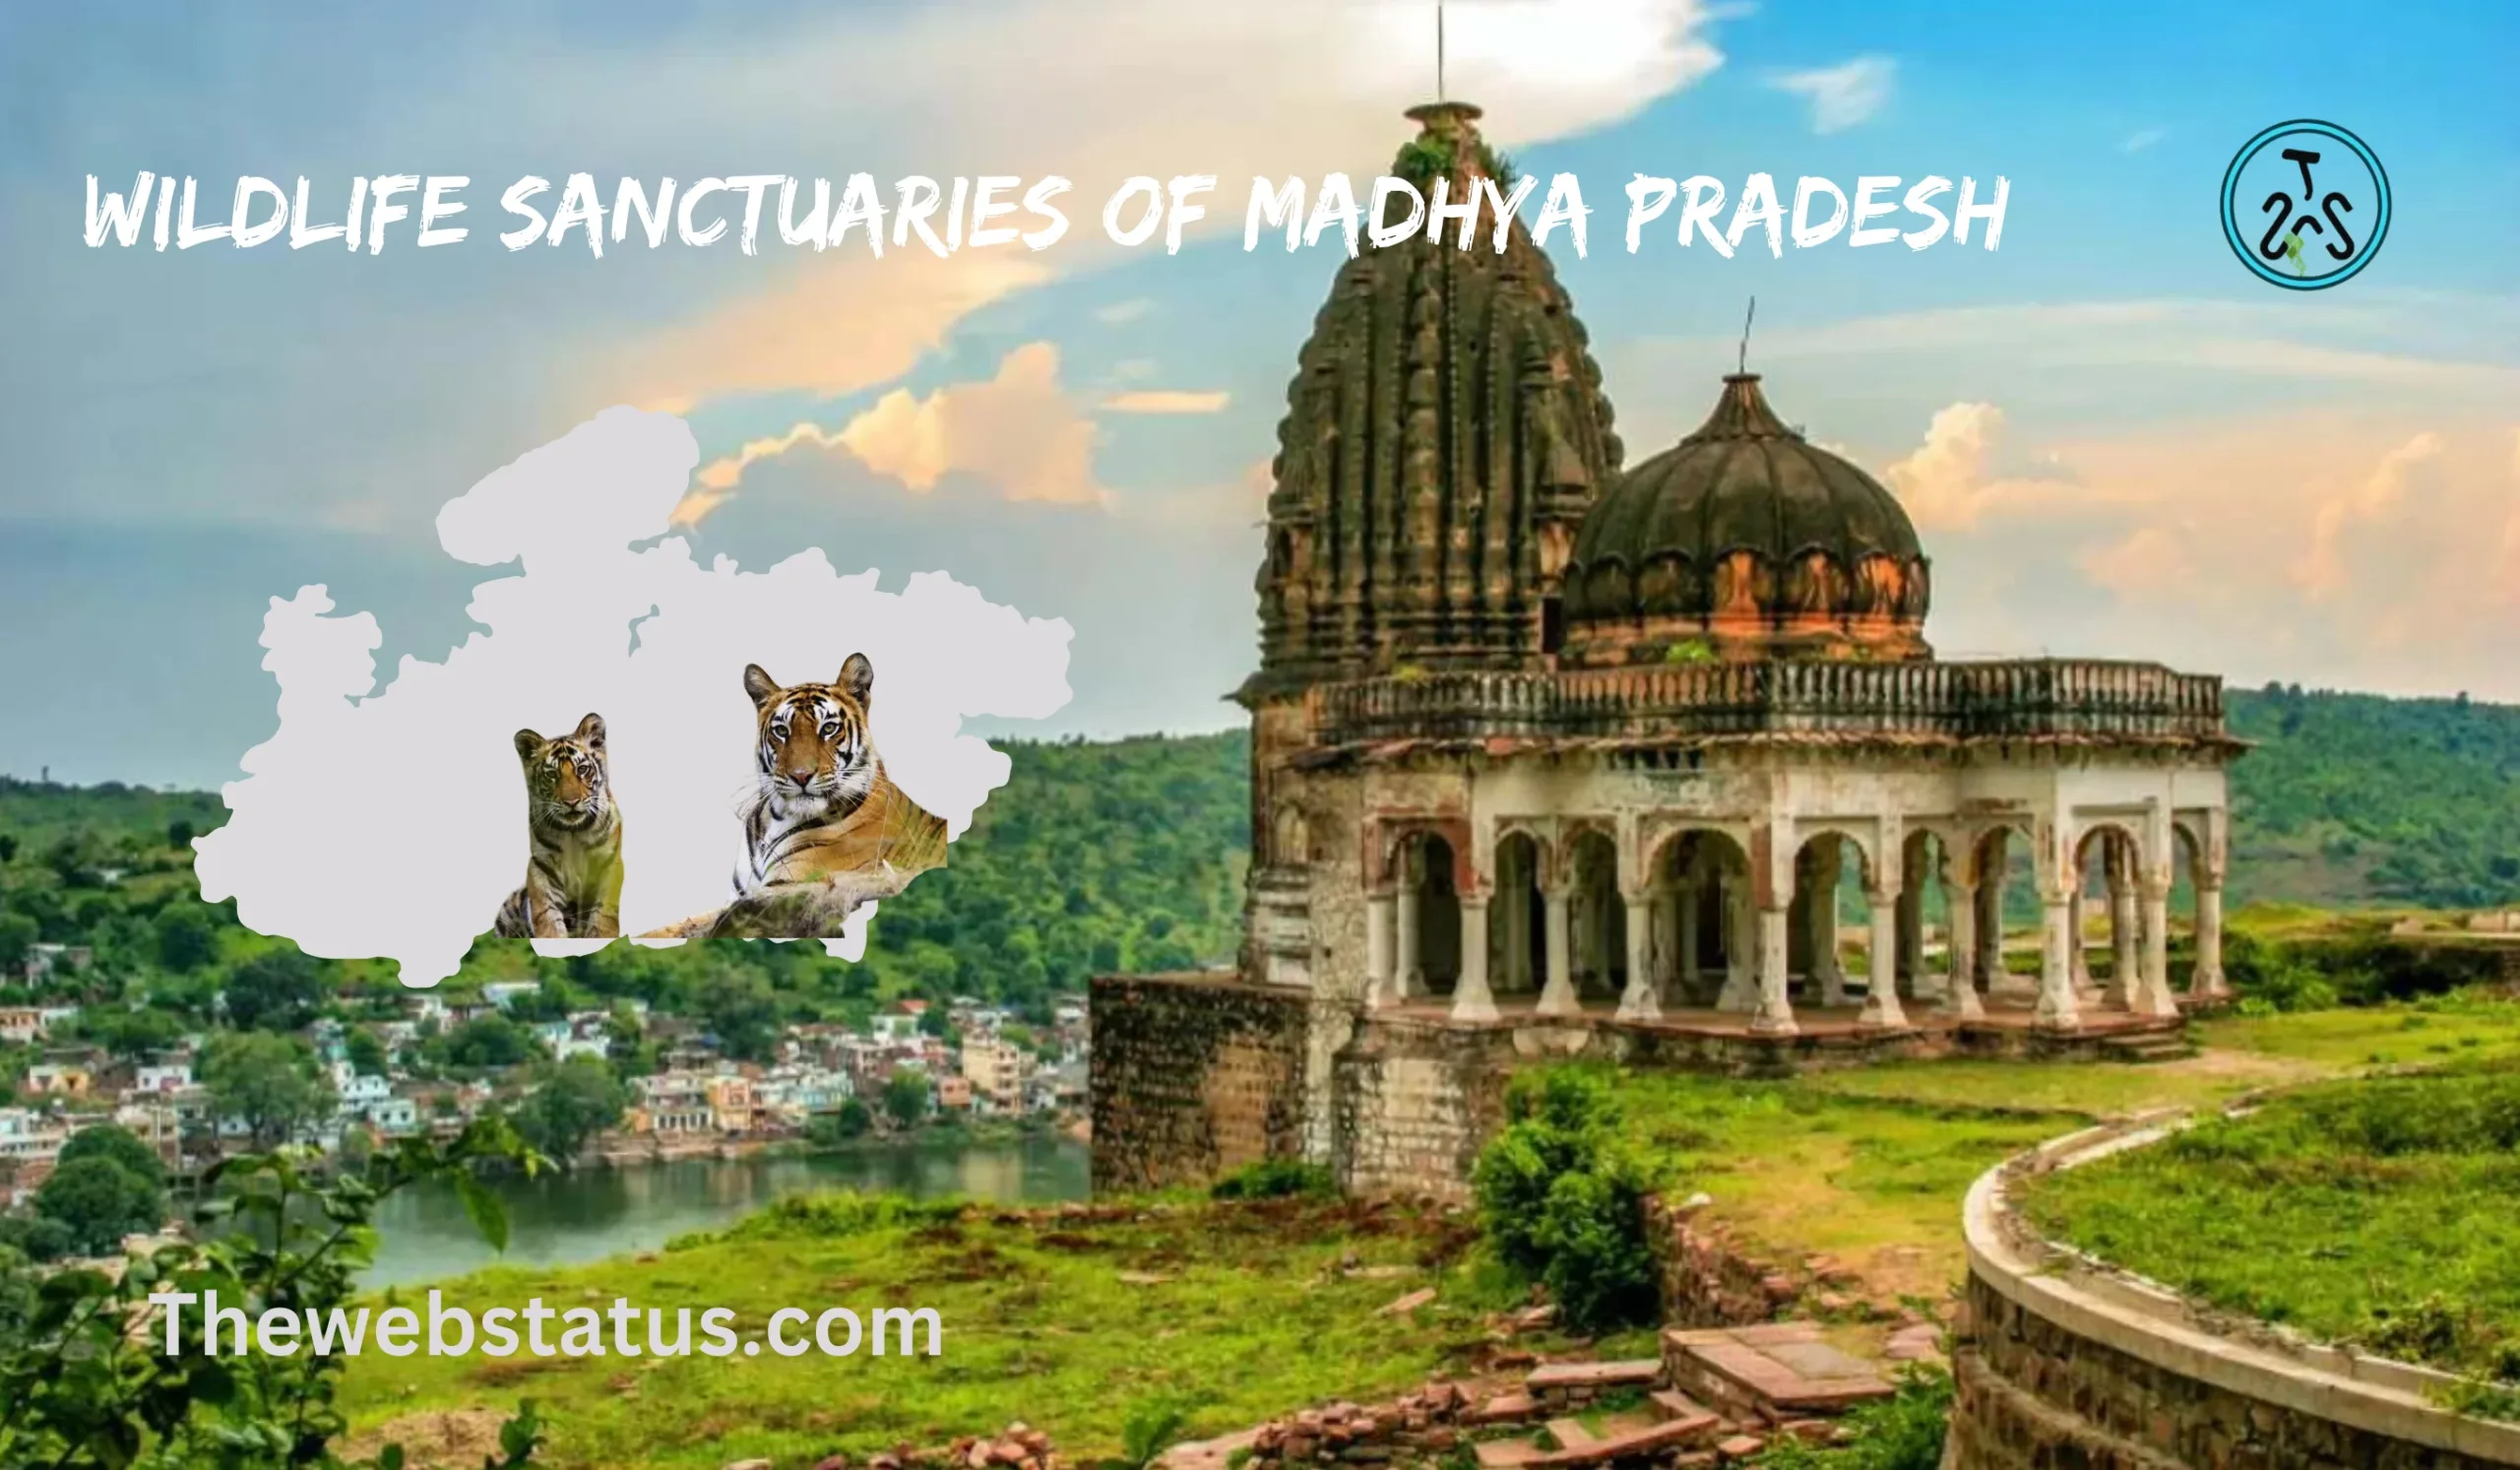 List of Wildlife Sanctuaries of Madhya Pradesh